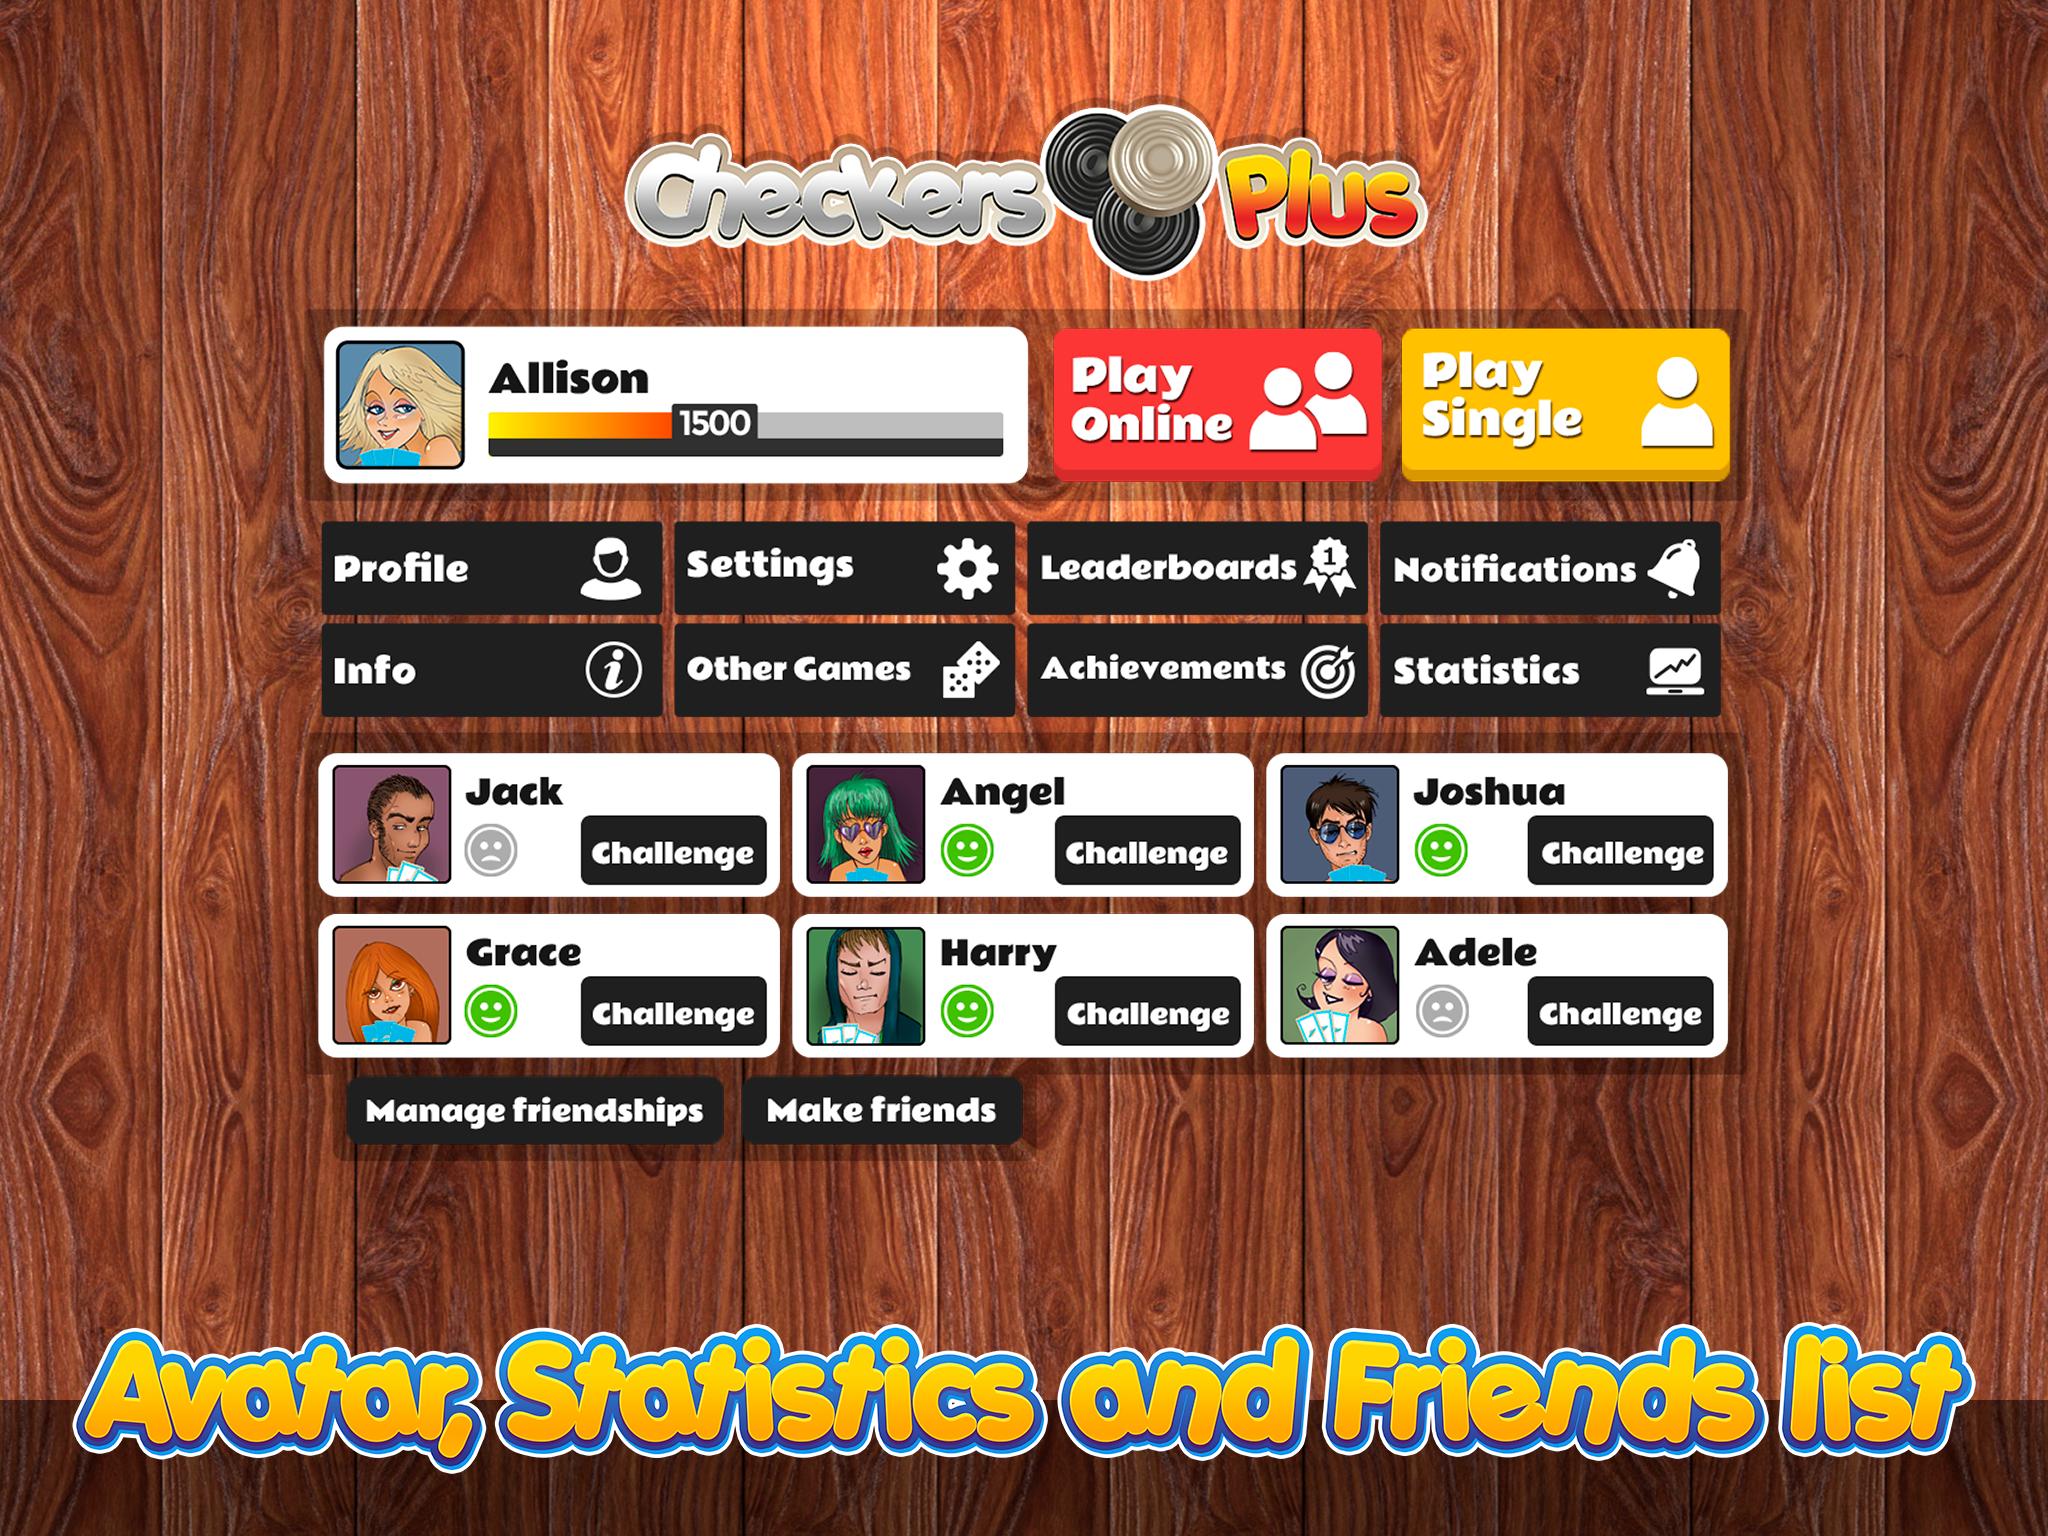 Checkers Plus Board Social Games 3.1.10 Screenshot 10